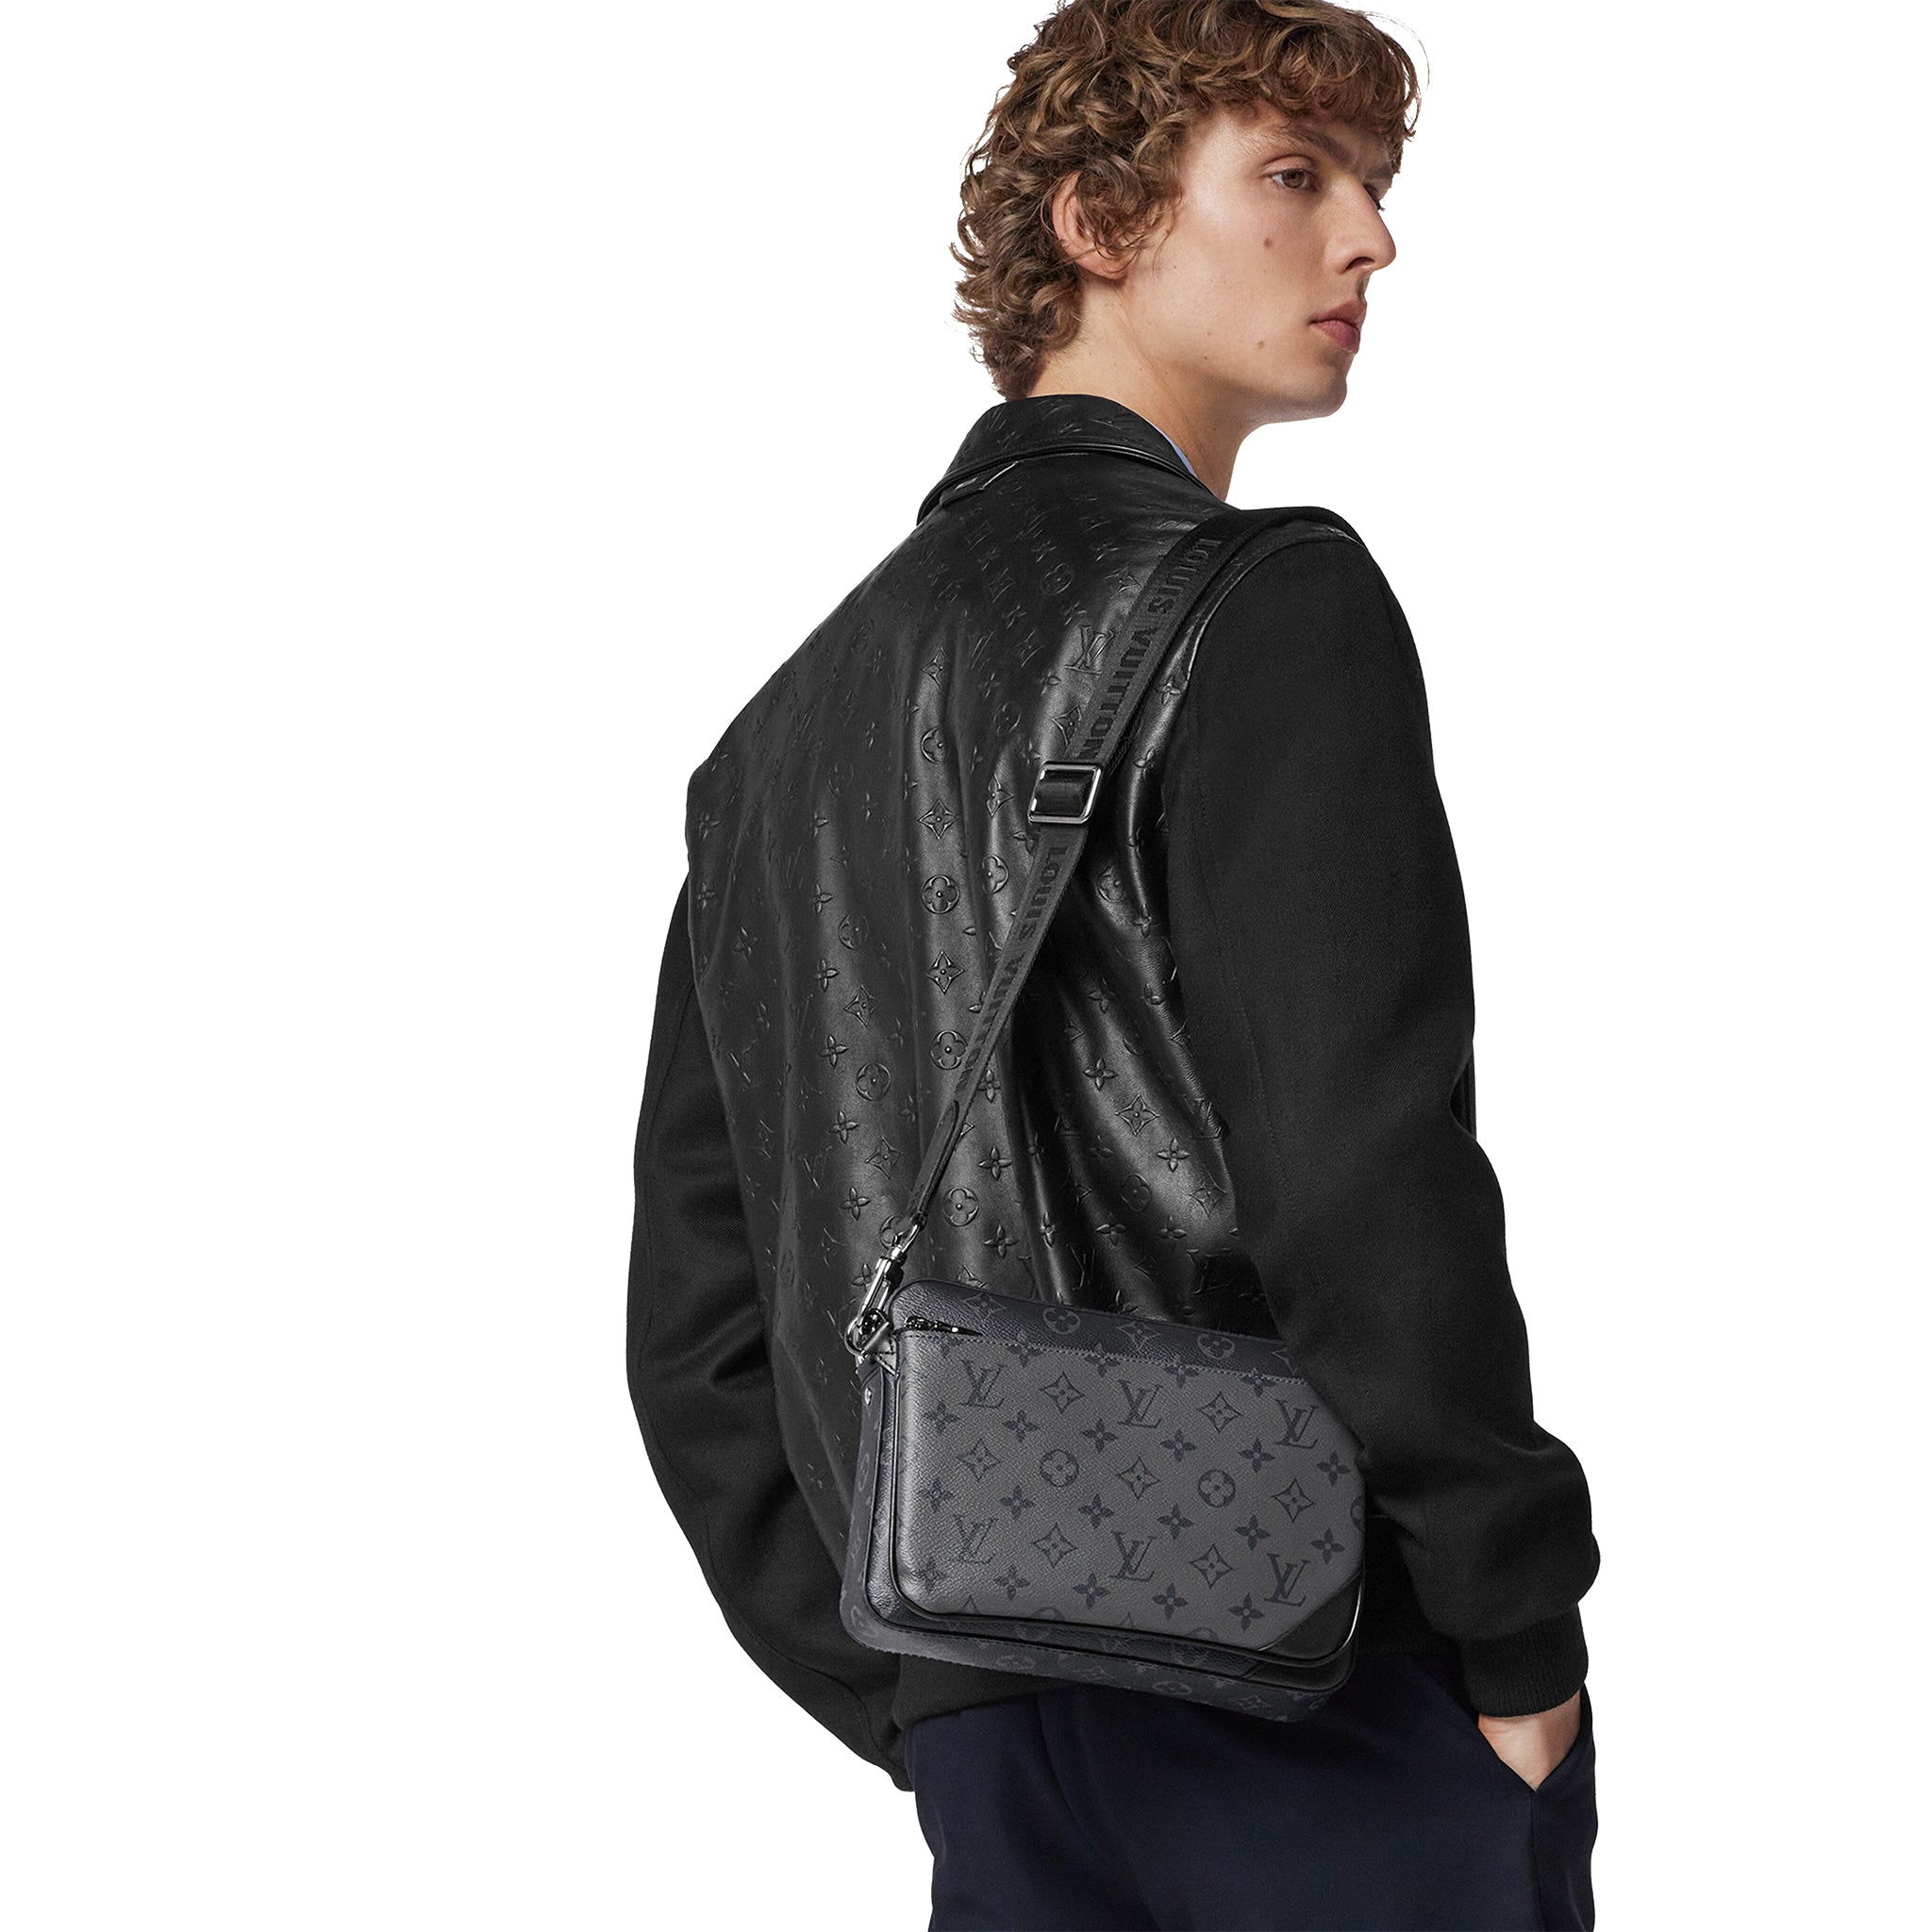 Model view of Louis Vuitton Monogram Trio Messenger Bag Black Grey NVPROD2320039V